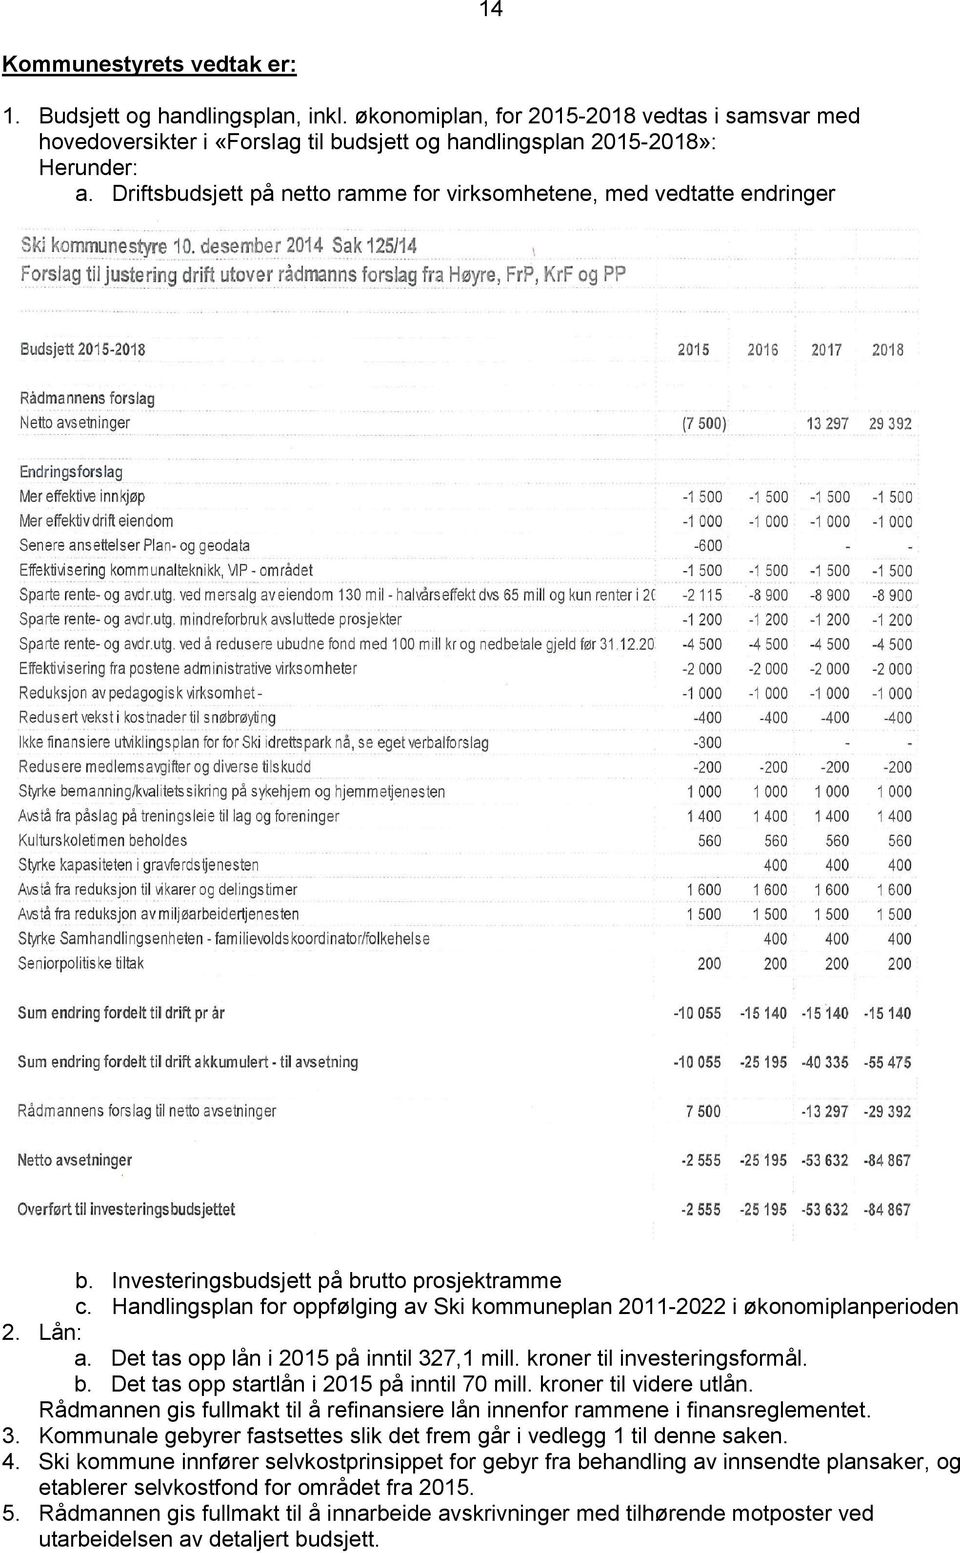 Handlingsplan for oppfølging av Ski kommuneplan 2011-2022 i økonomiplanperioden Lån: a. Det tas opp lån i 2015 på inntil 327,1 mill. kroner til investeringsformål. b.